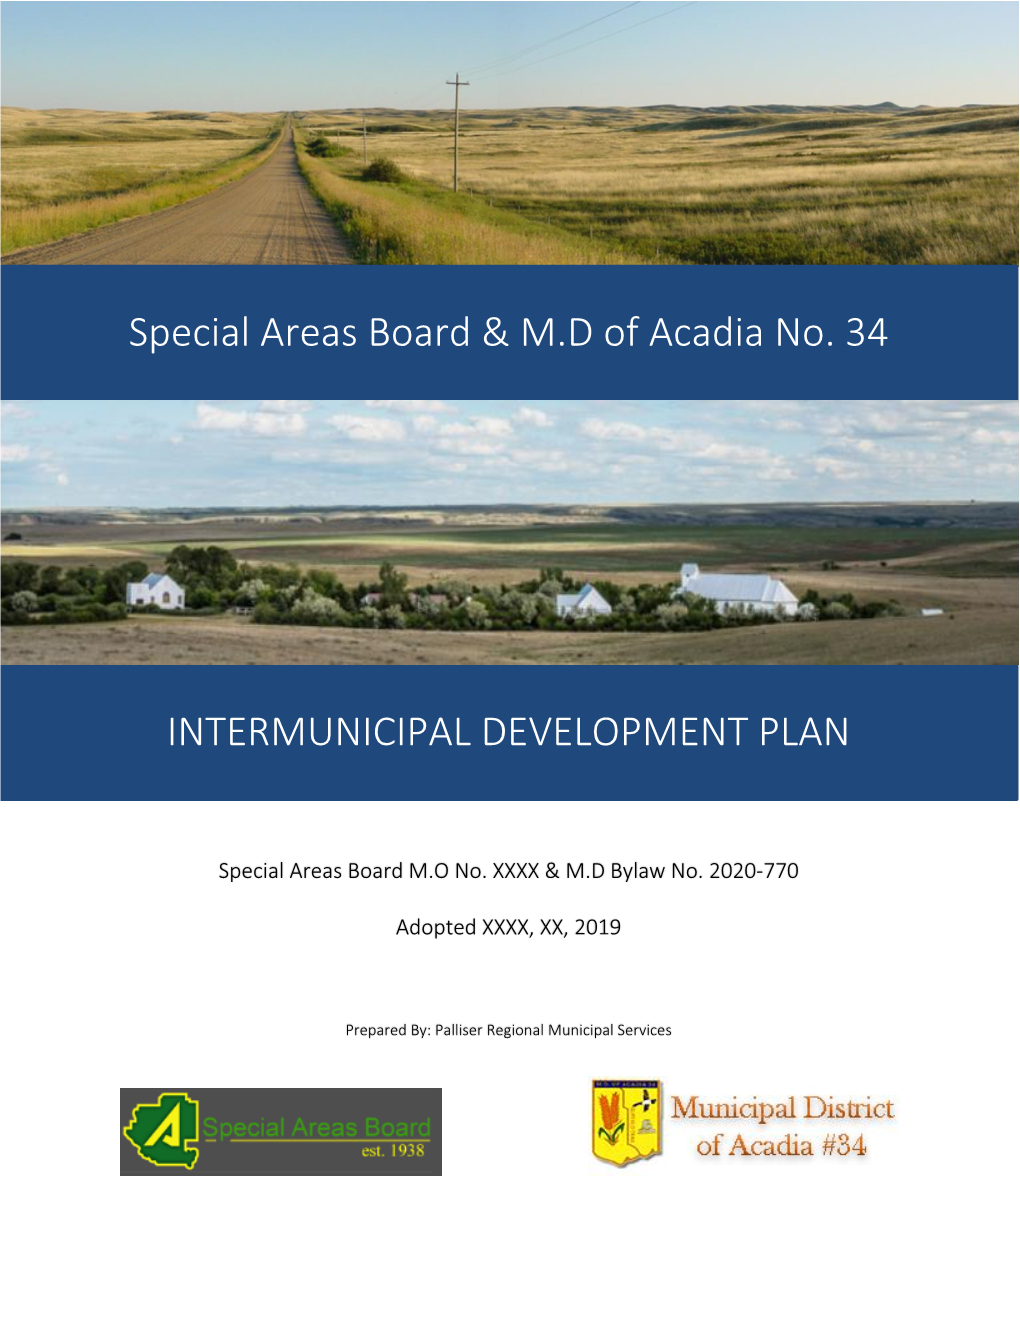 Intermunicipal Development Plan